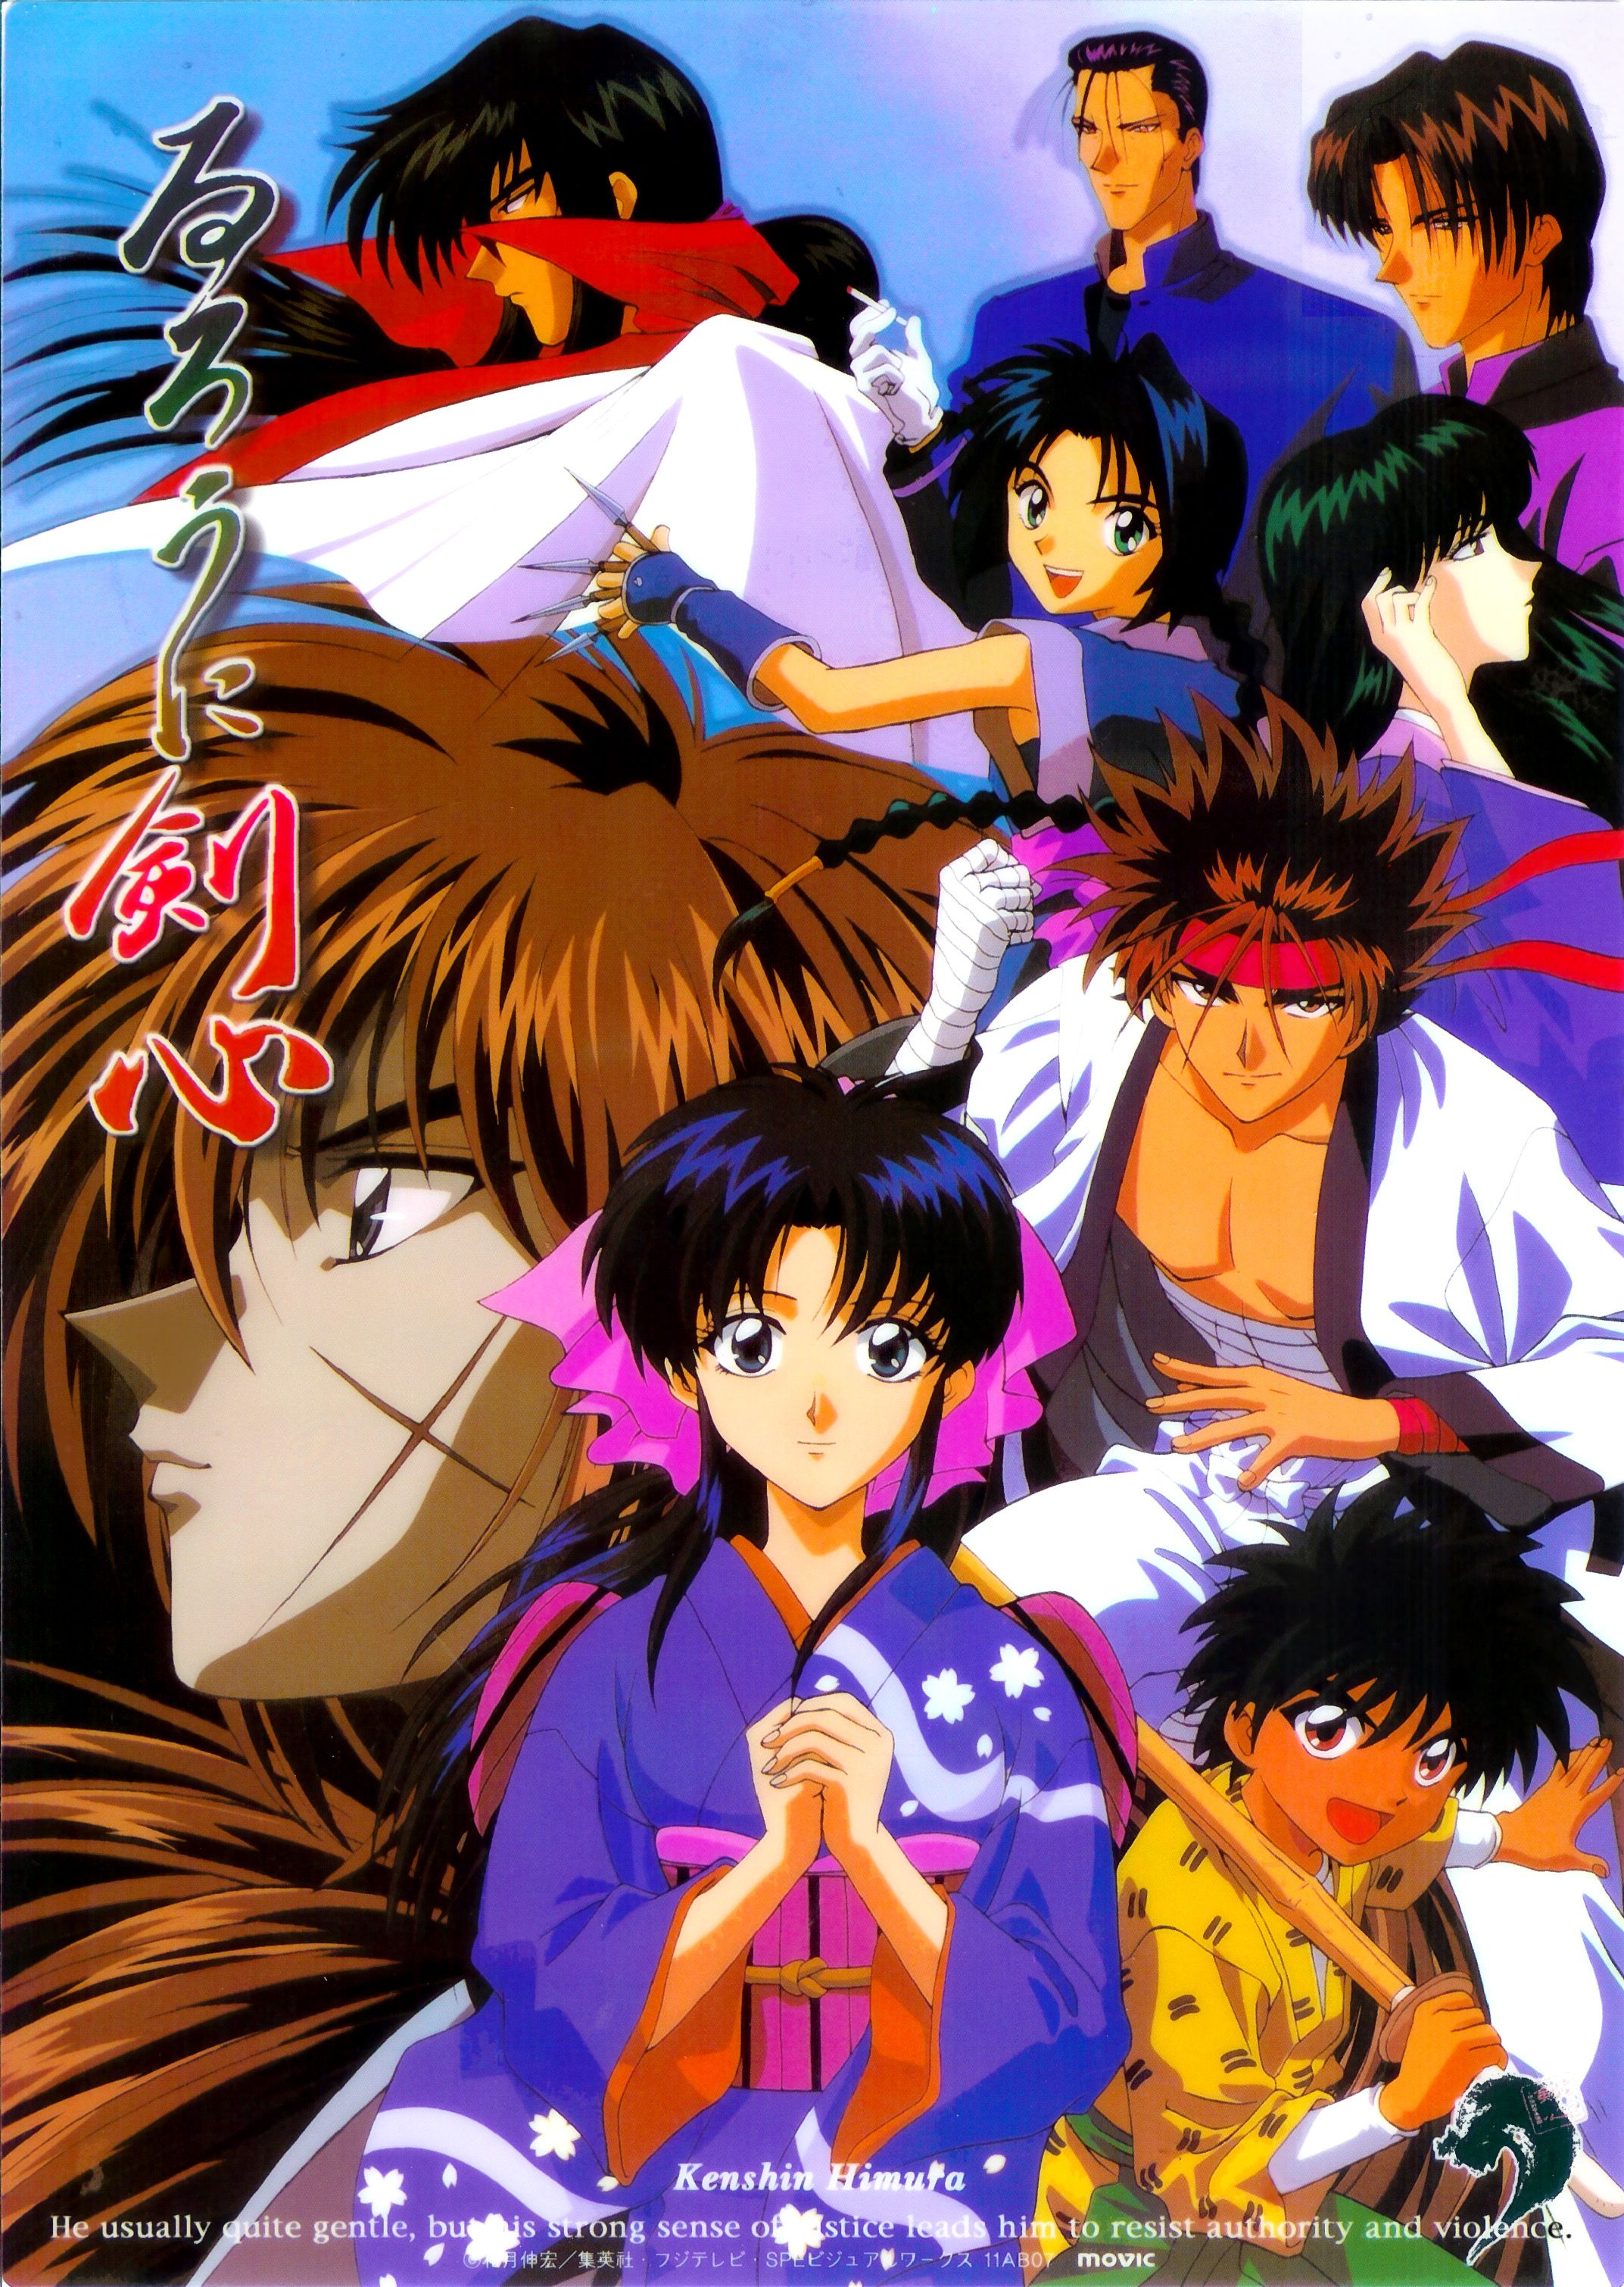 Anime Trending - BREAKING: Rurouni Kenshin (2023) - Anime Trailer! The  anime is scheduled for 2023.